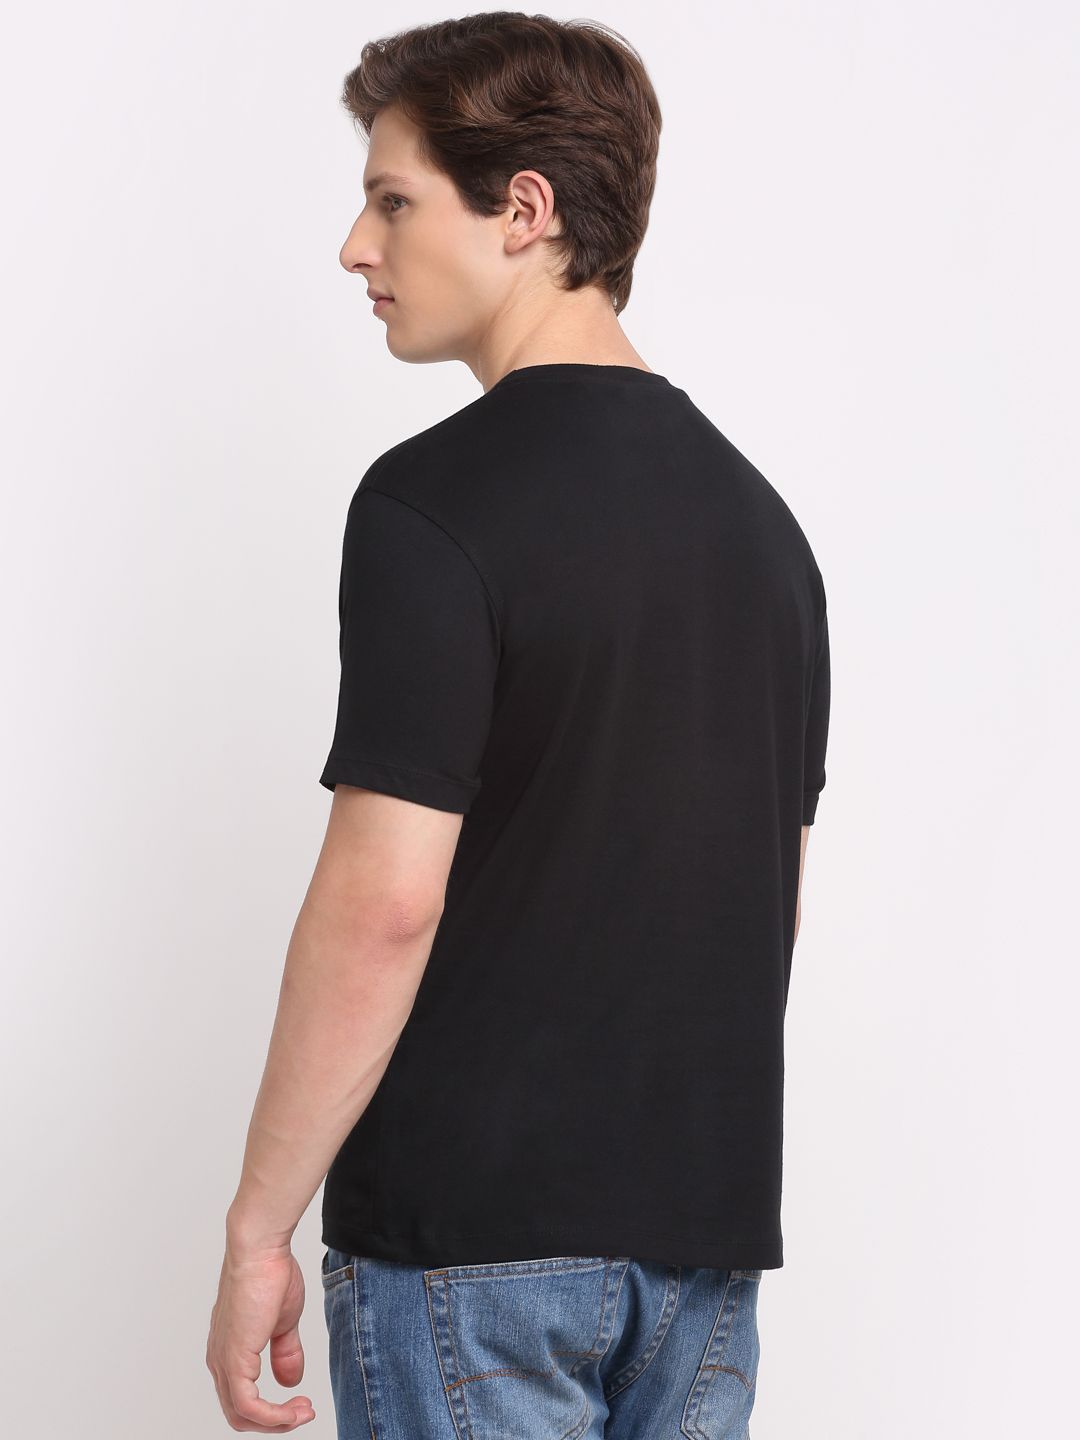 Printed Pattern, Men Combed Cotton Black T-Shirt